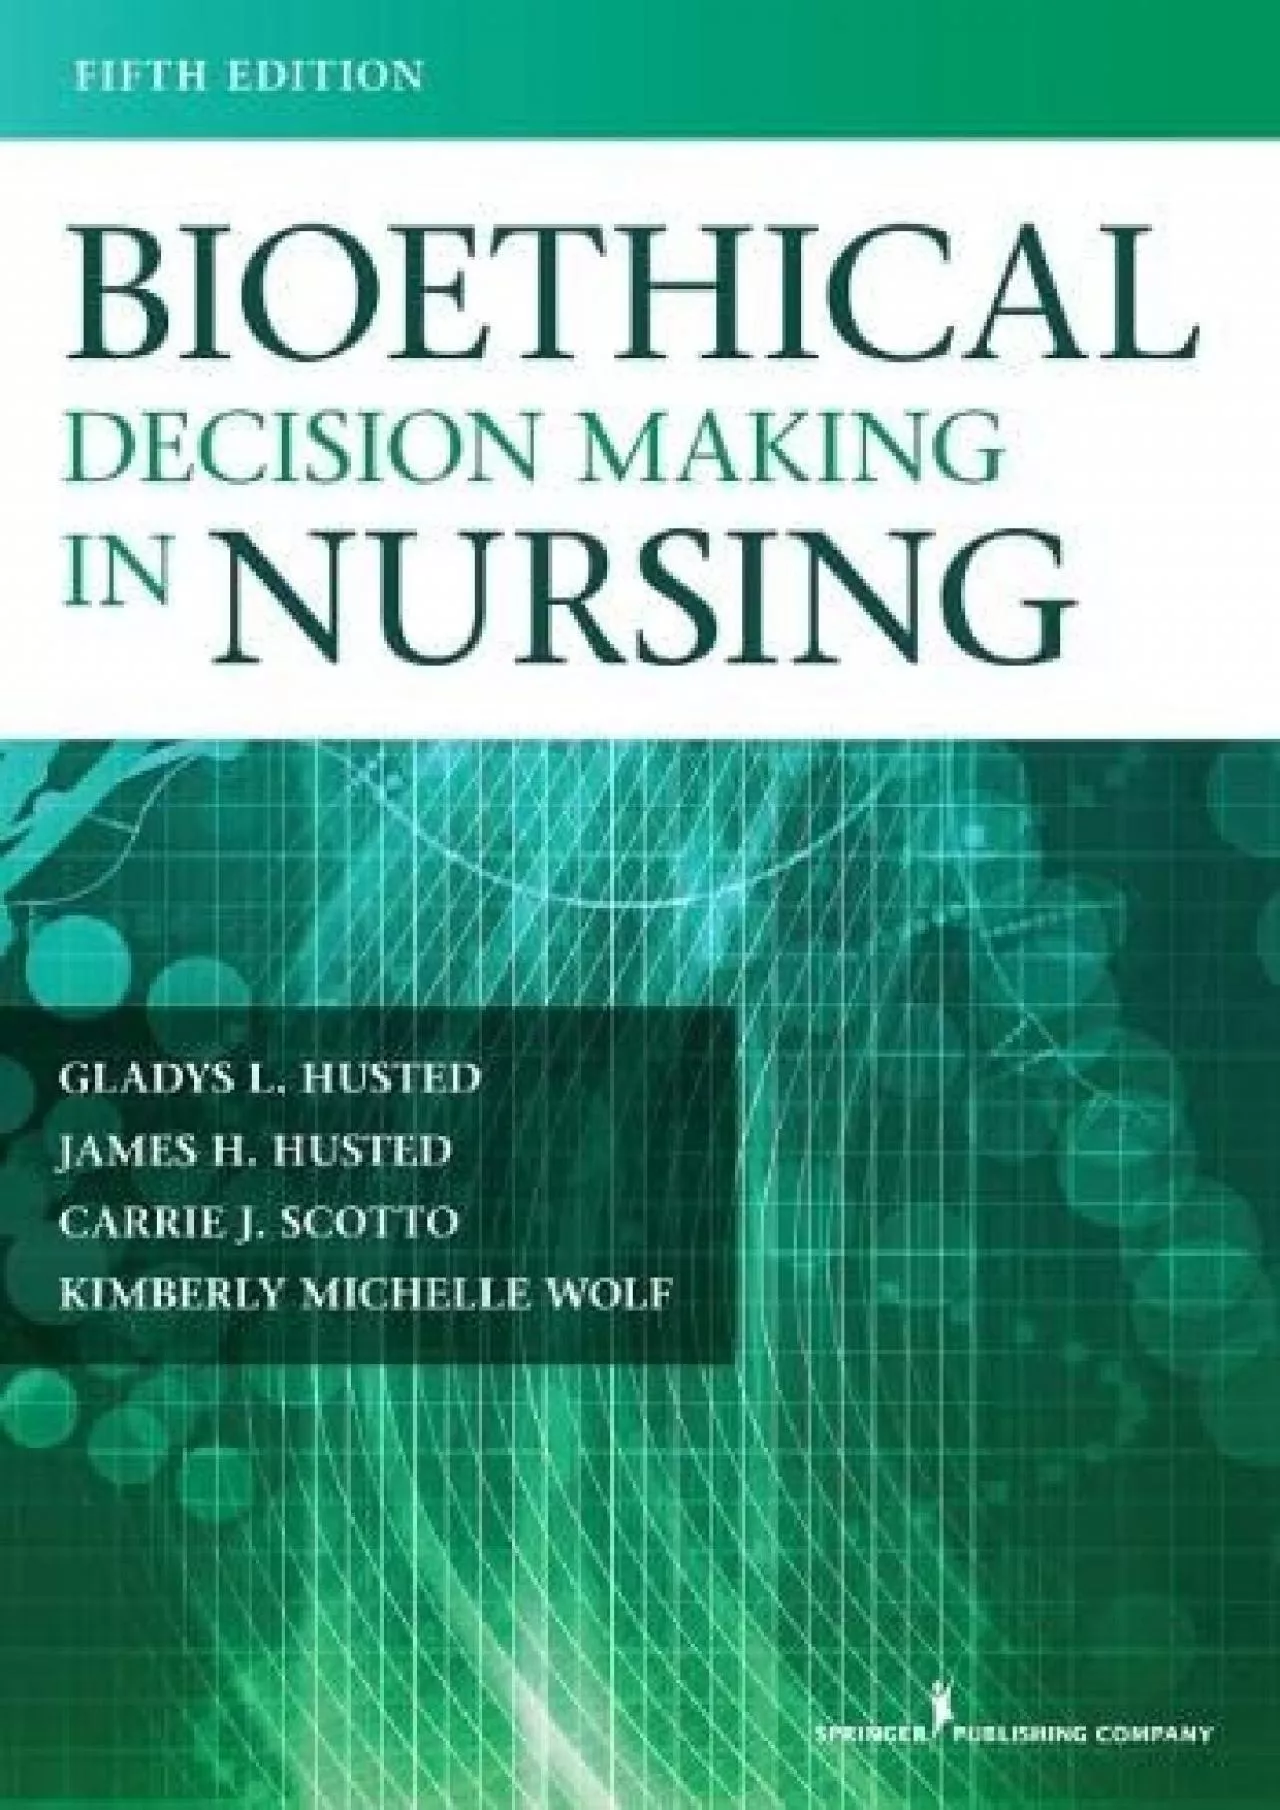 (BOOK)-Bioethical Decision Making in Nursing